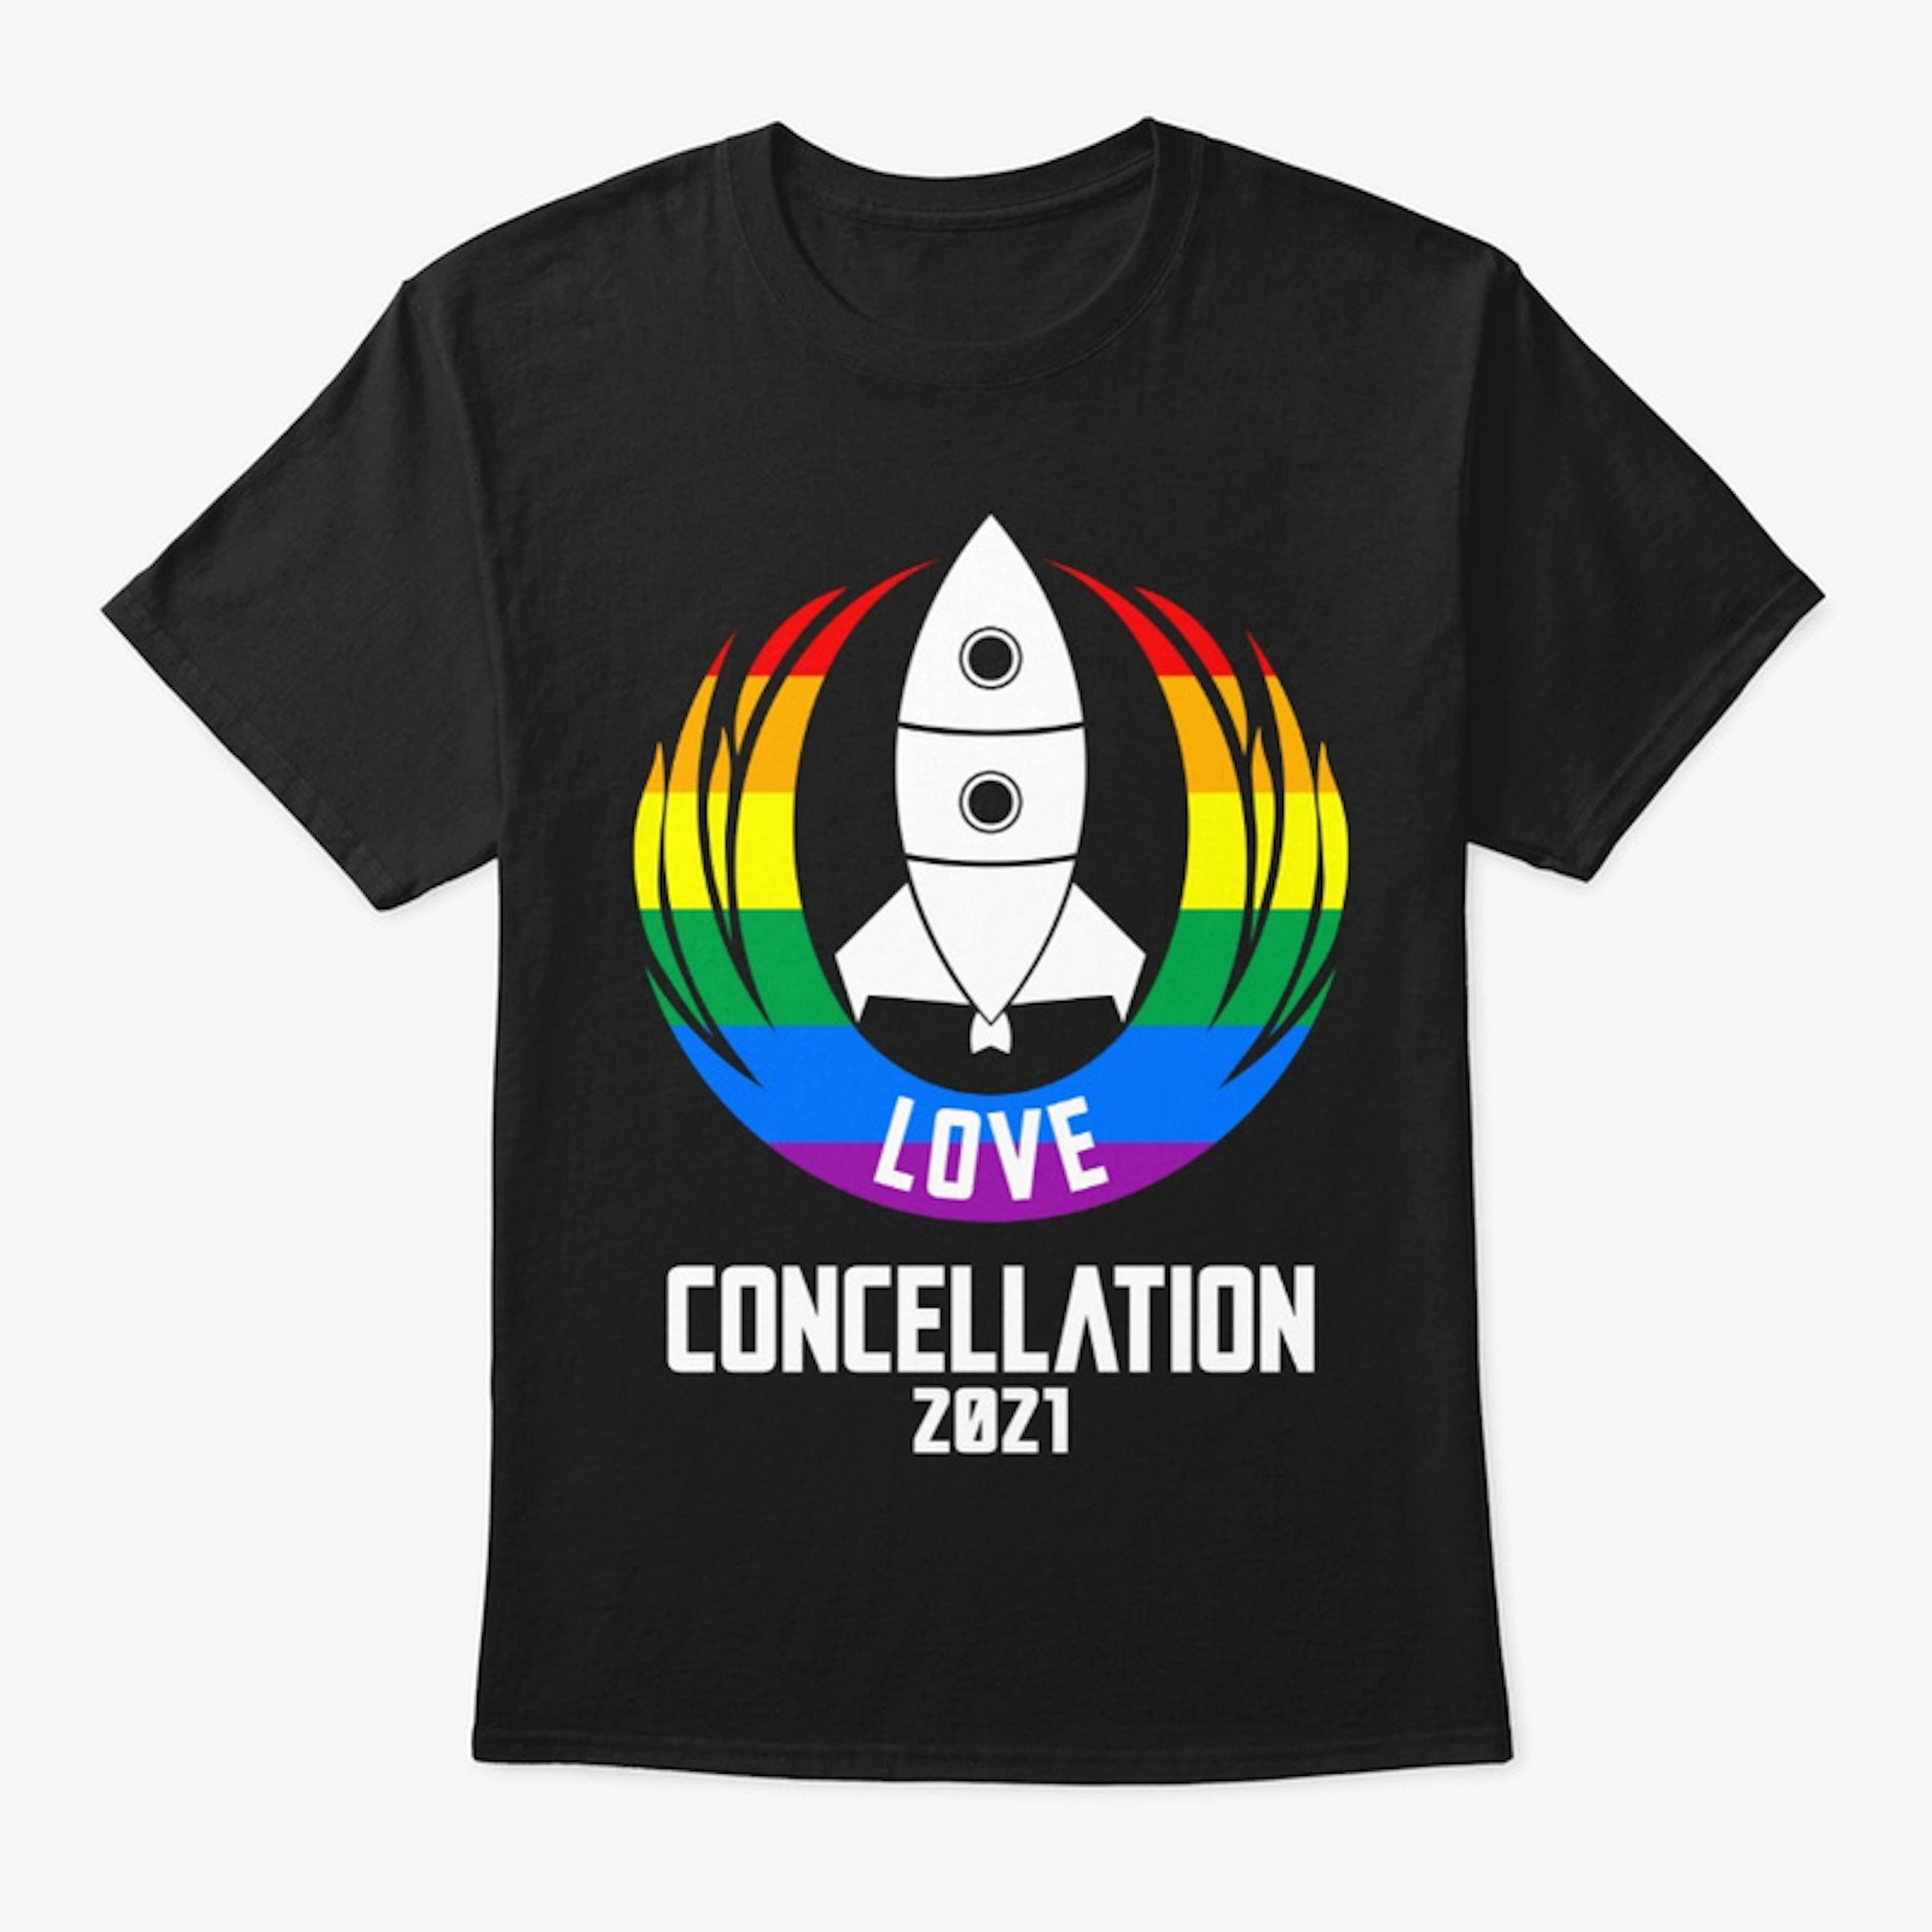 Concellation 2021 Love!